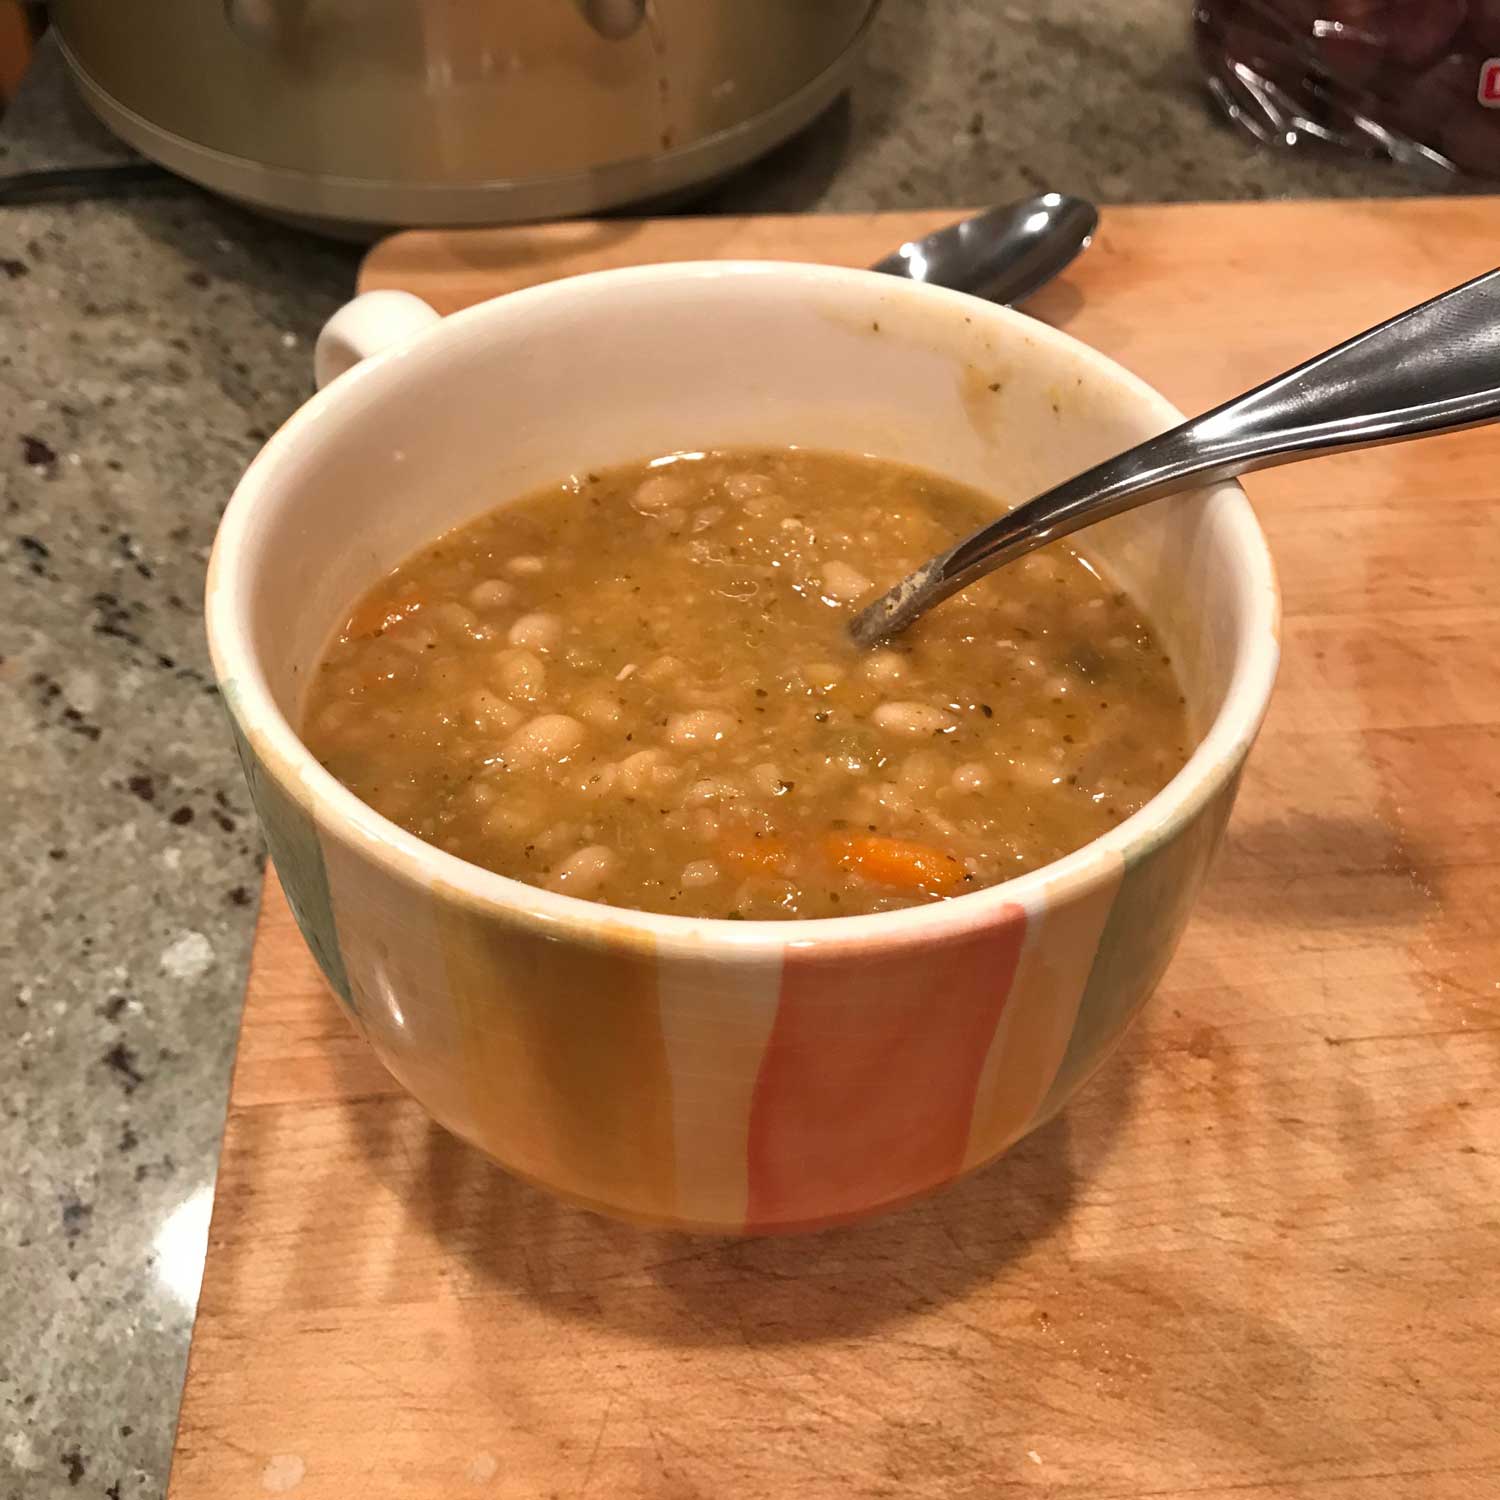 Slow Cooker Navy Bean Soup